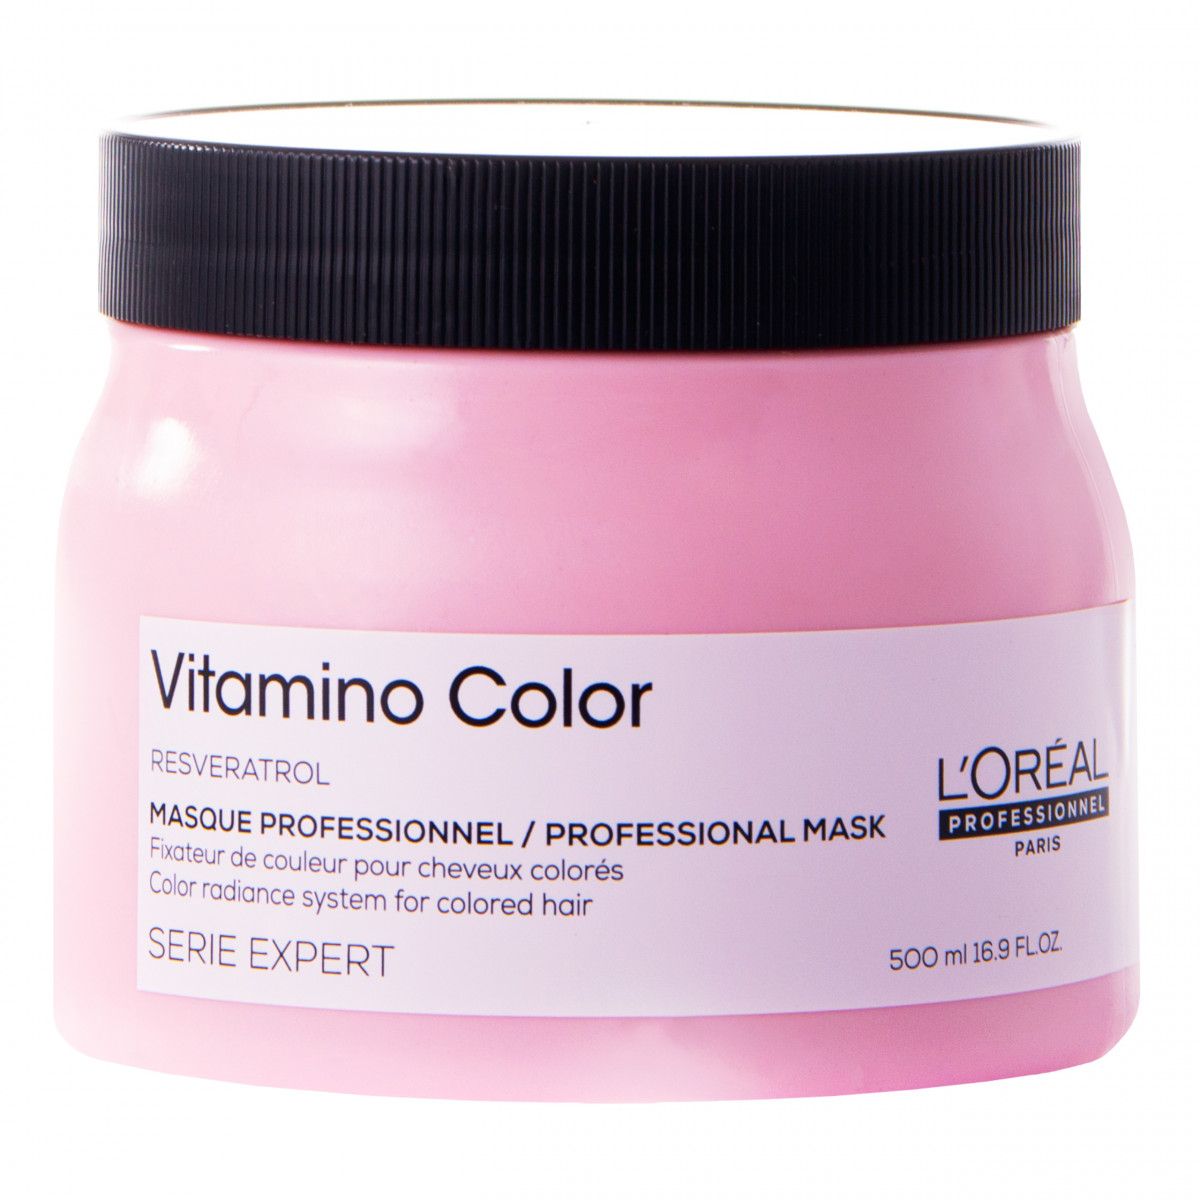 L'oreal Resveratrol Vitamino Color maska do włosów farbowanych 500ml